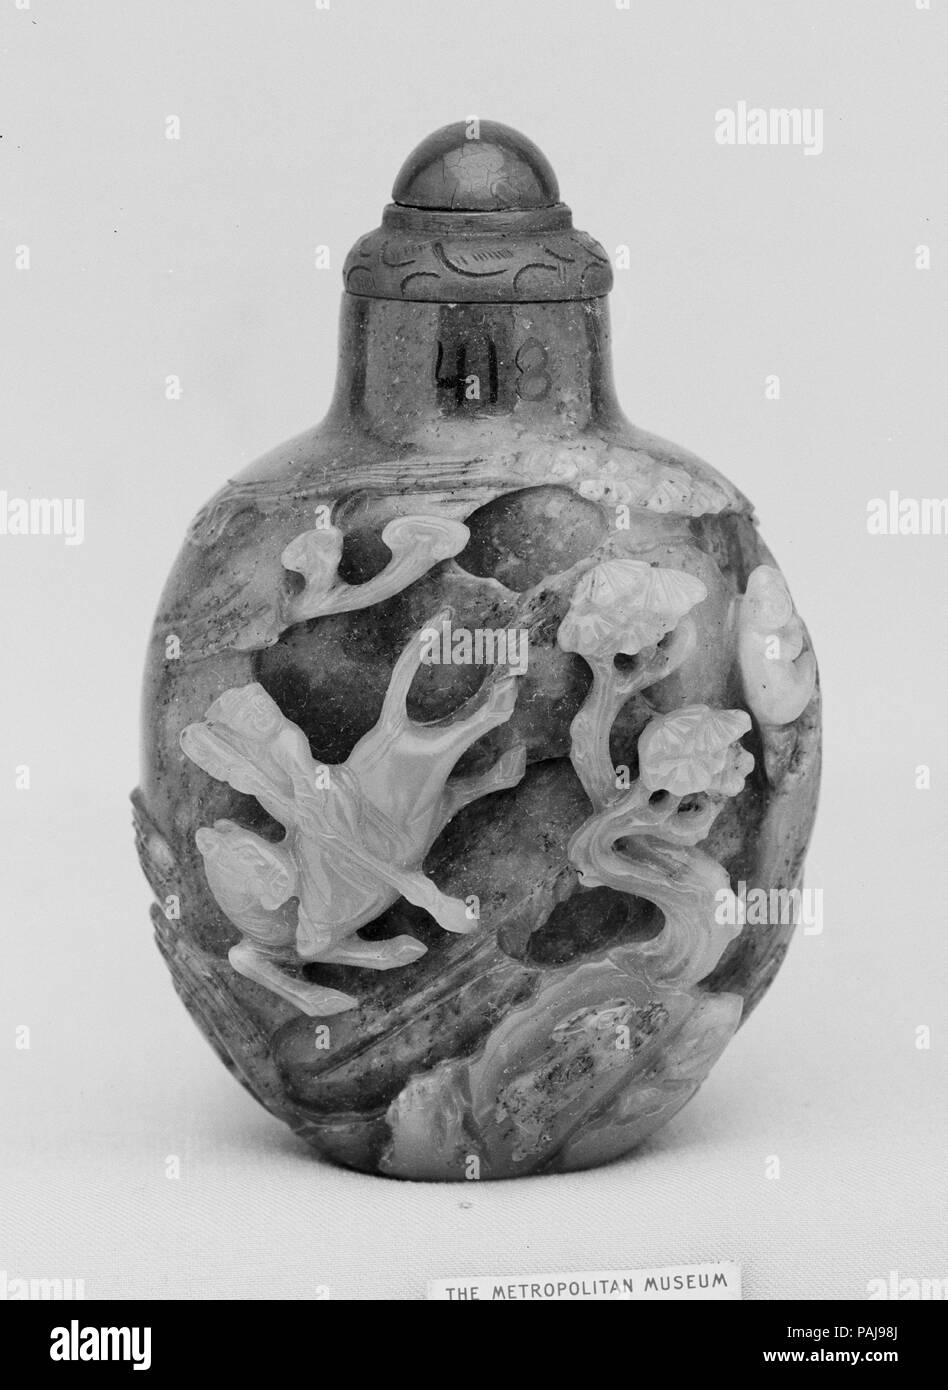 Schnupftabak Flasche mit Stopfen. Kultur: China. Abmessungen: H. inkl. Top 2 7/8 in. (7,3 cm); H. w/o Top 2 3/8 in. (6 cm); W. 1 7/8 in. (4,8 cm); D.1 1/4 in. (3.2 cm). Museum: Metropolitan Museum of Art, New York, USA. Stockfoto